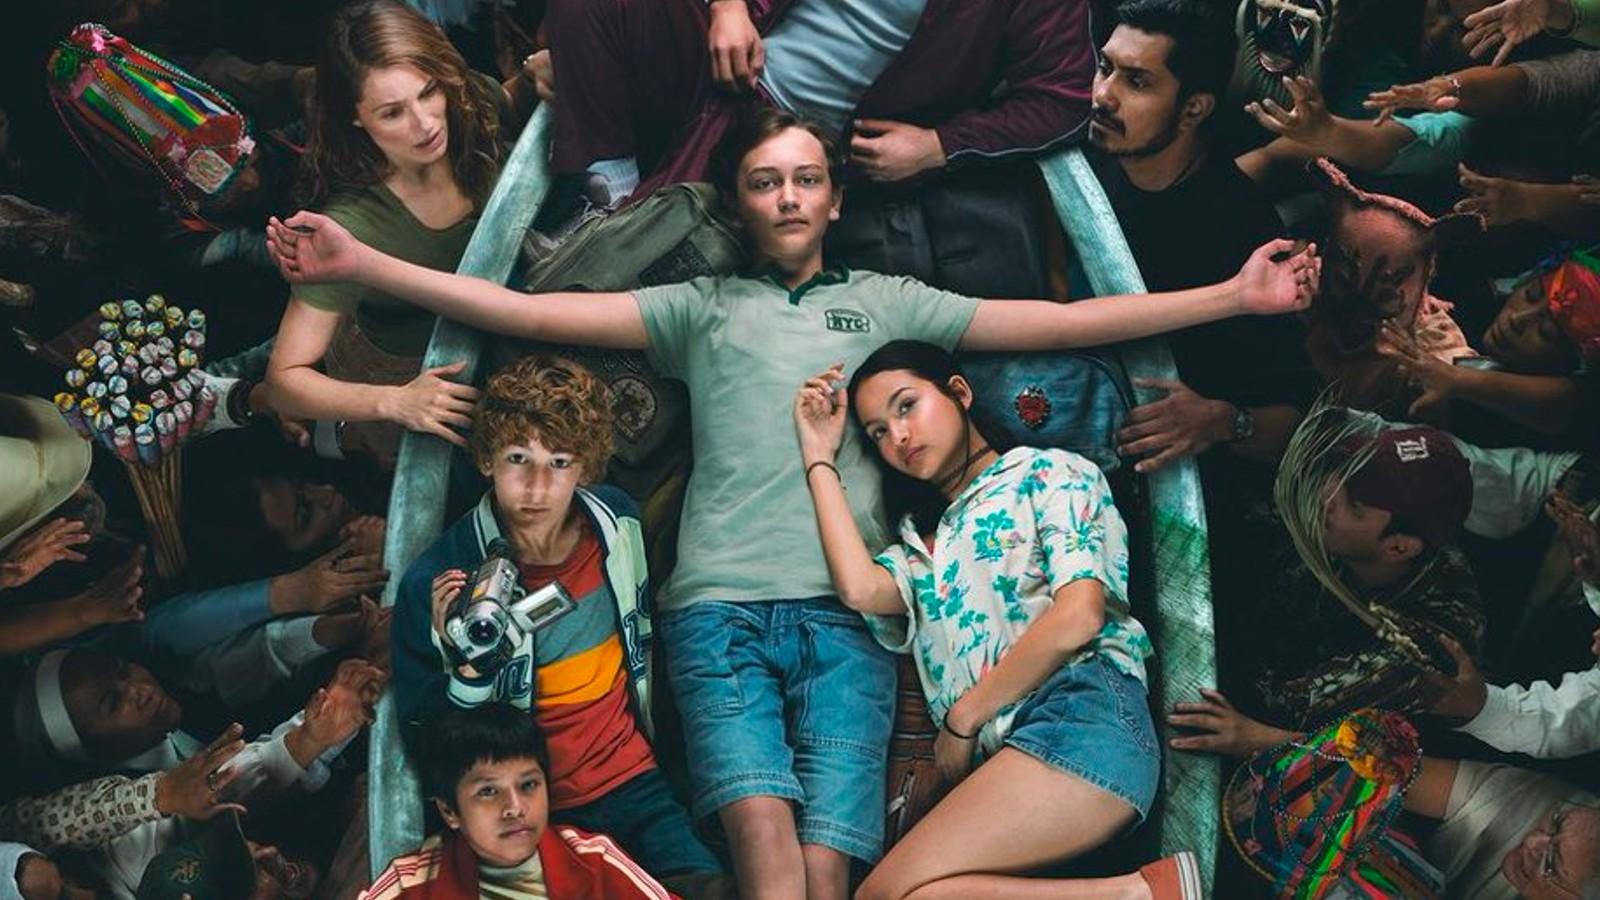 The Chosen One' Millarworld Netflix Series: Everything We Know So